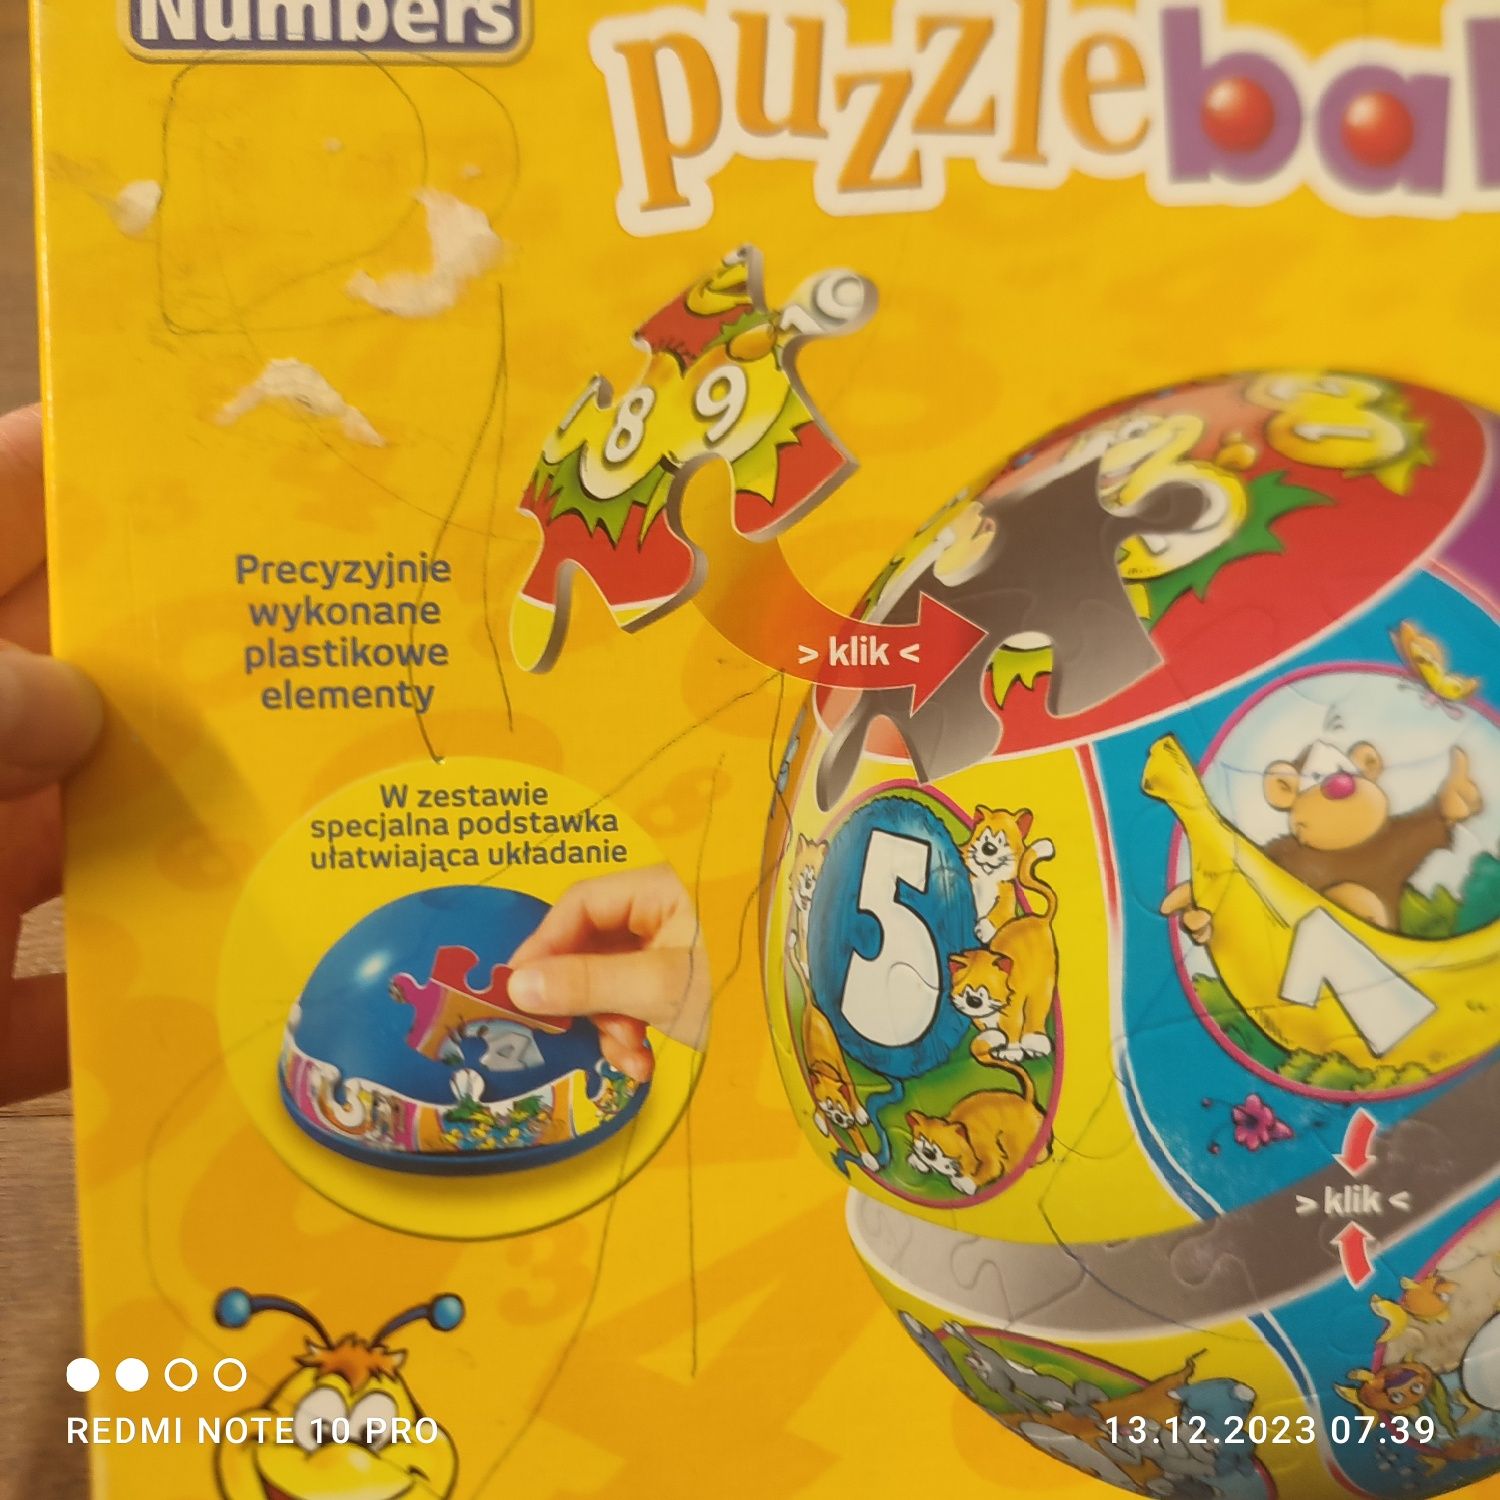 Puzzle ball ravensburger 123 numbers piłka